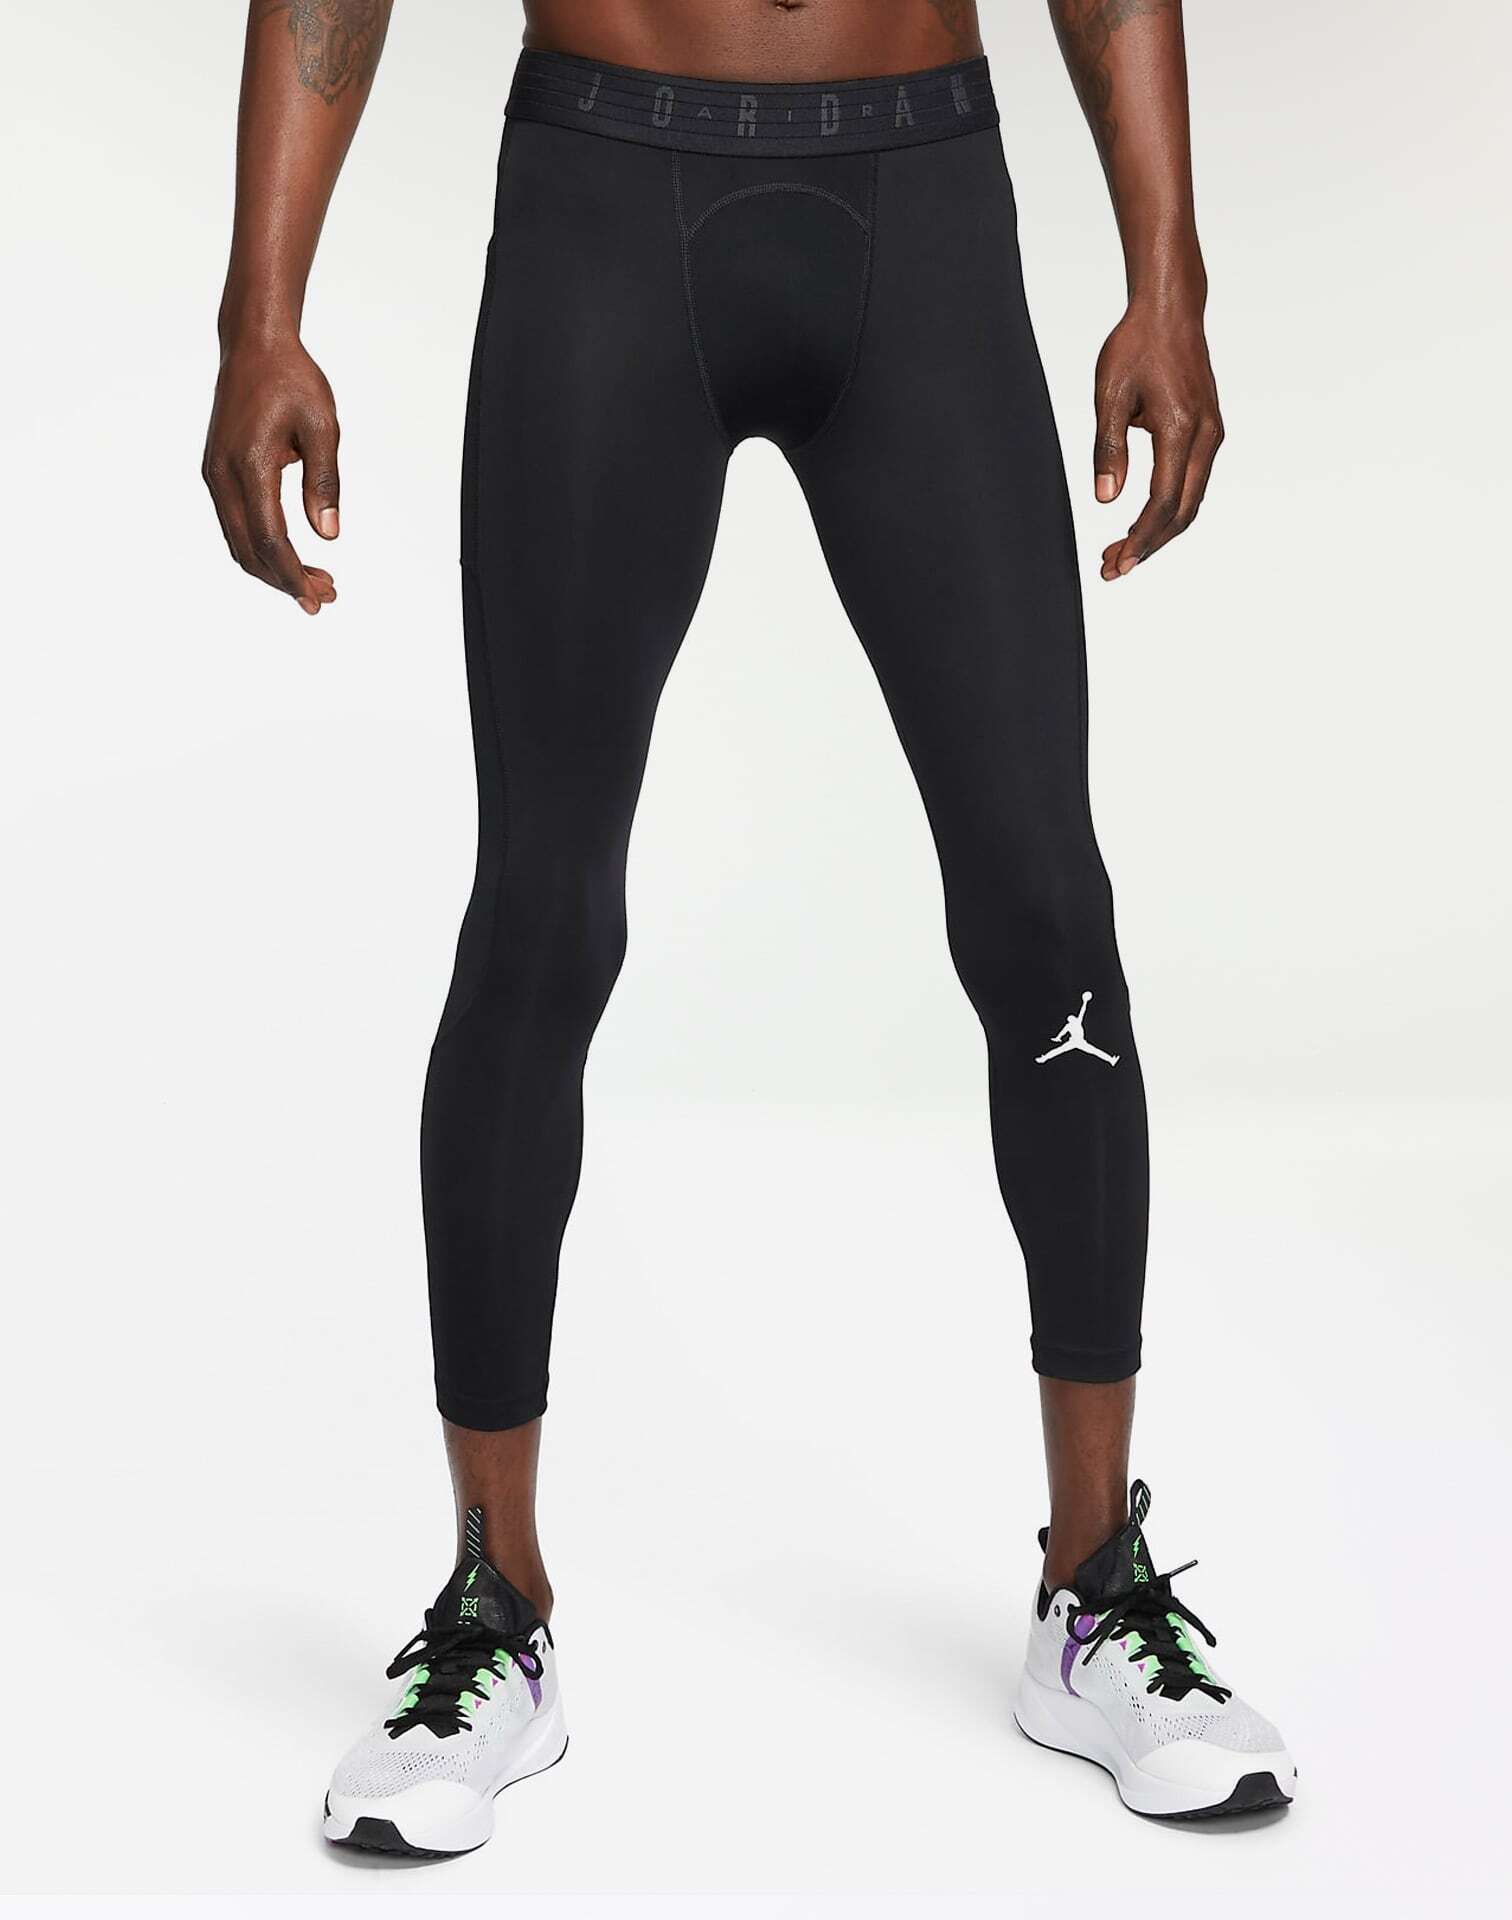 Mens Nike Pro Elite Air Jordan Blue 3/4 Basketball Tights Compression Pants  S